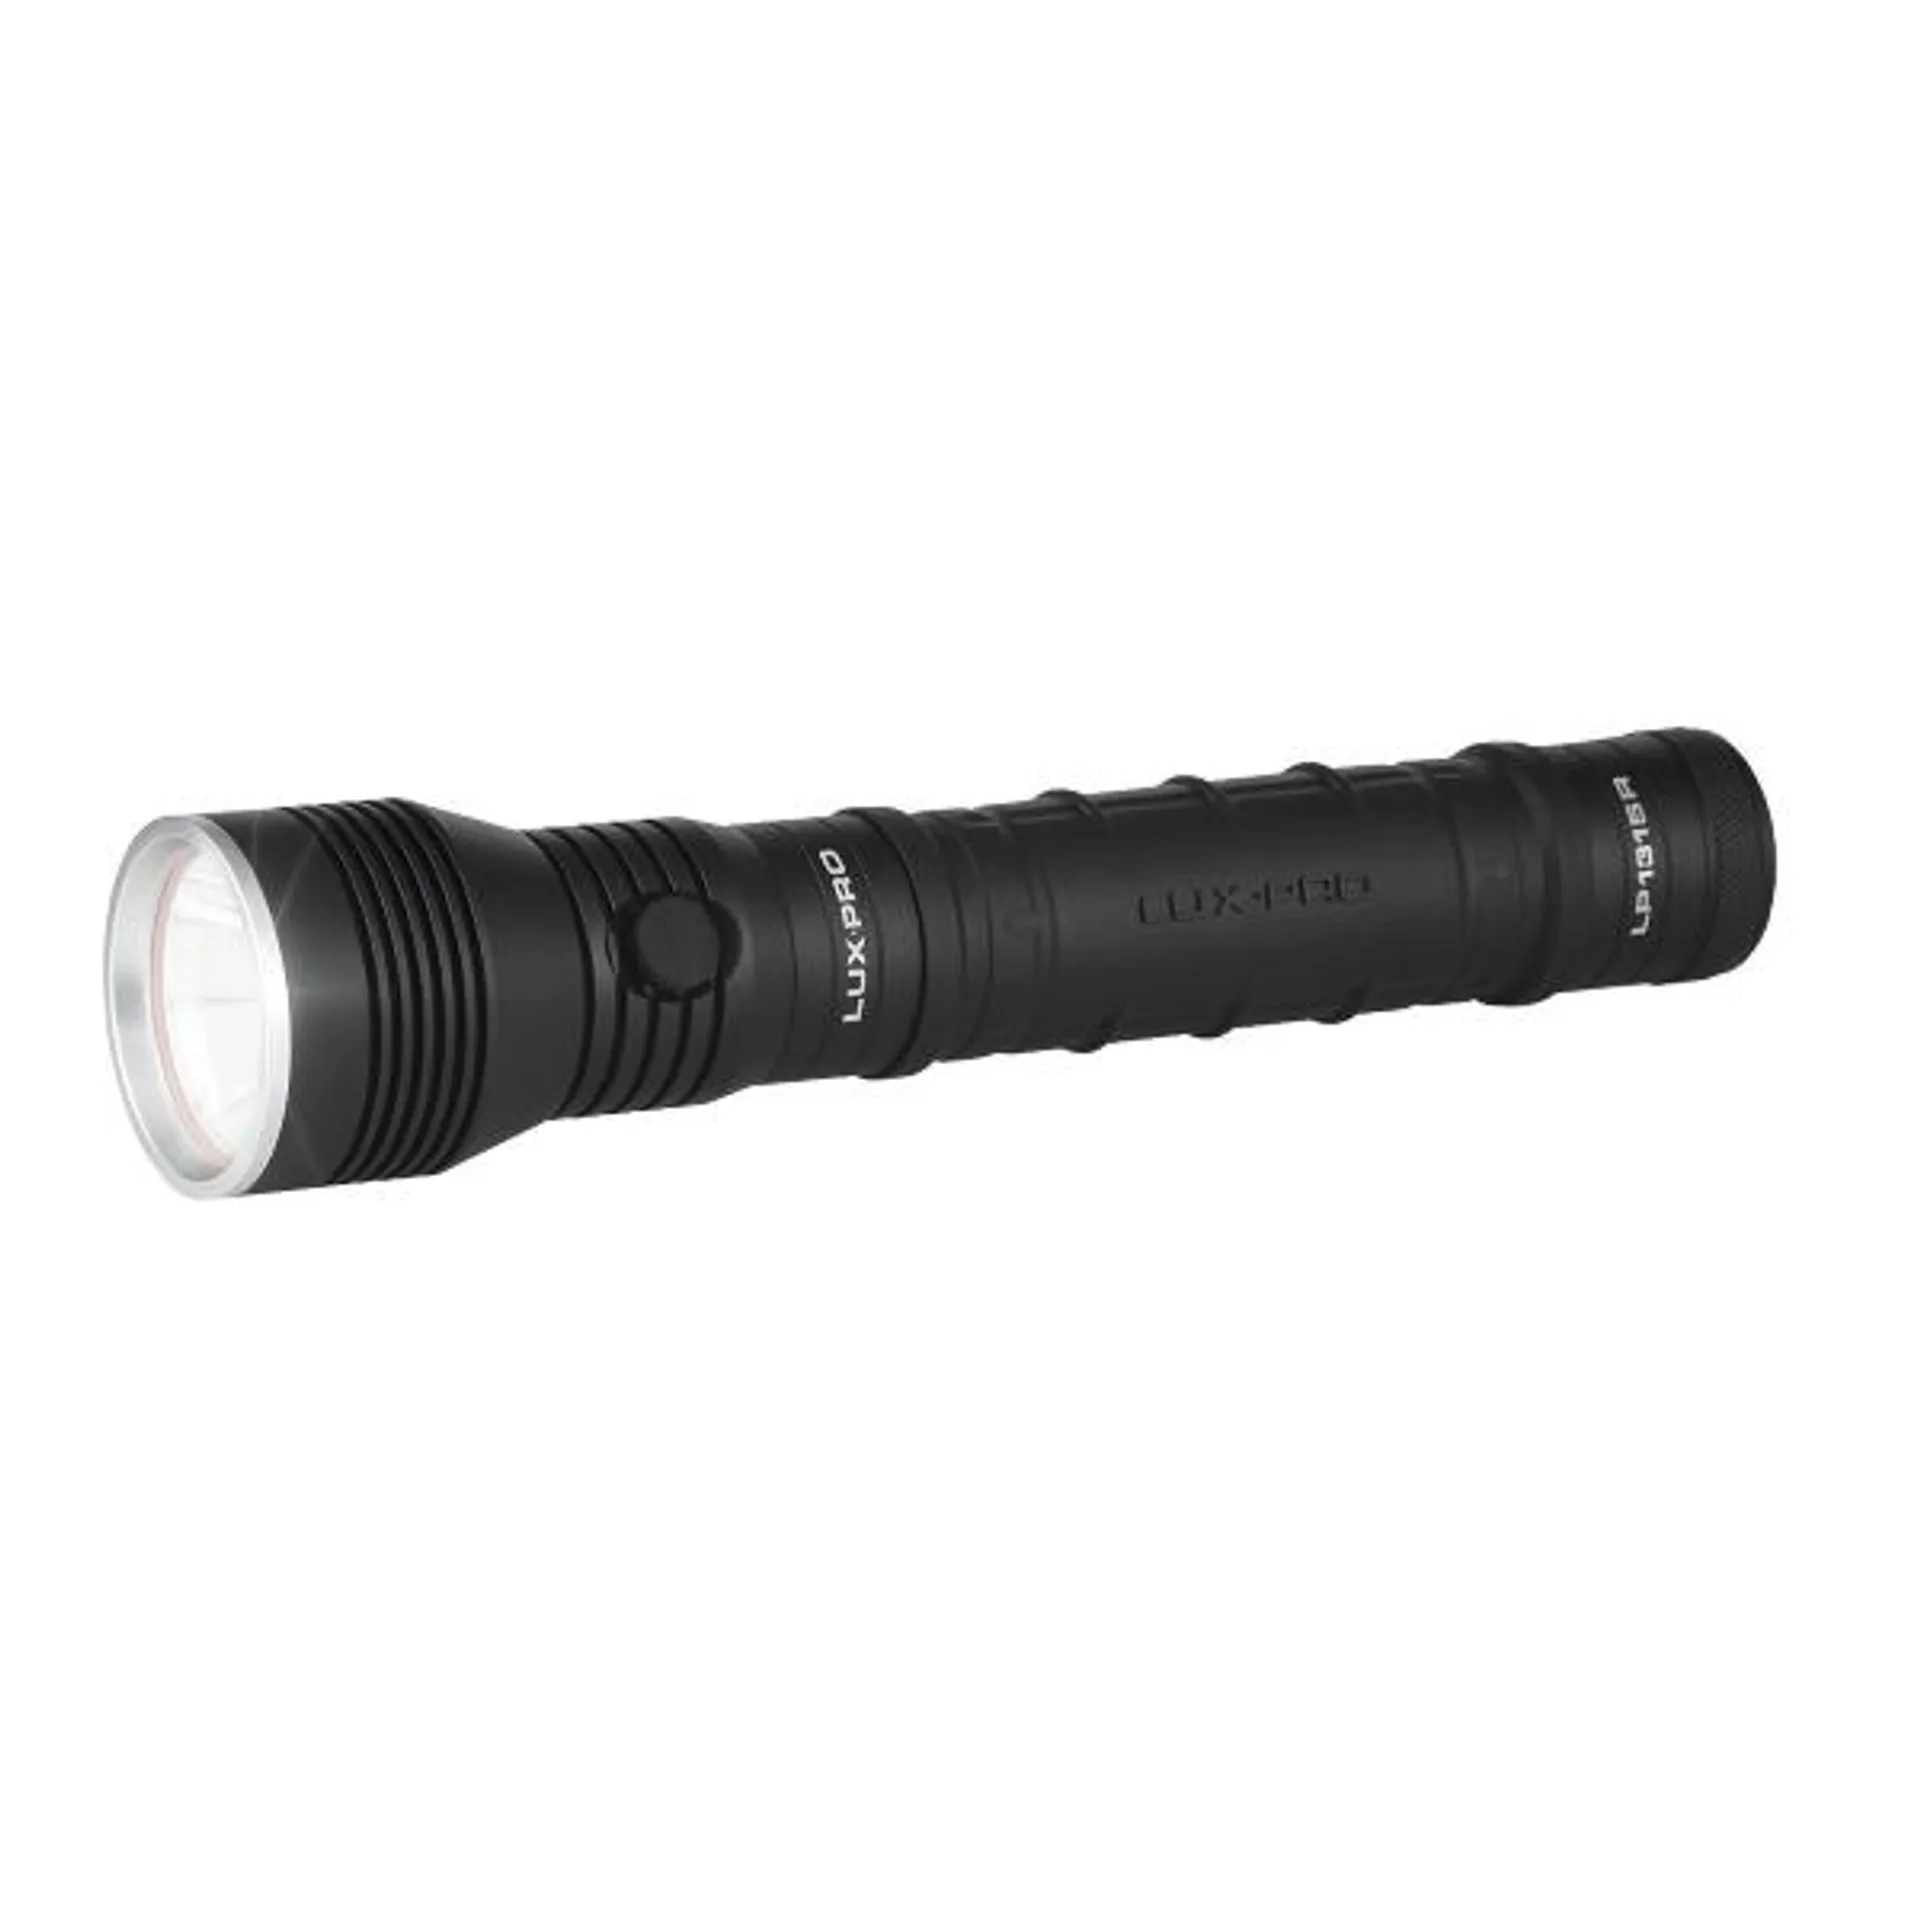 Extreme Output Heavy Duty 1650 Lumen Flashlight With TackGrip